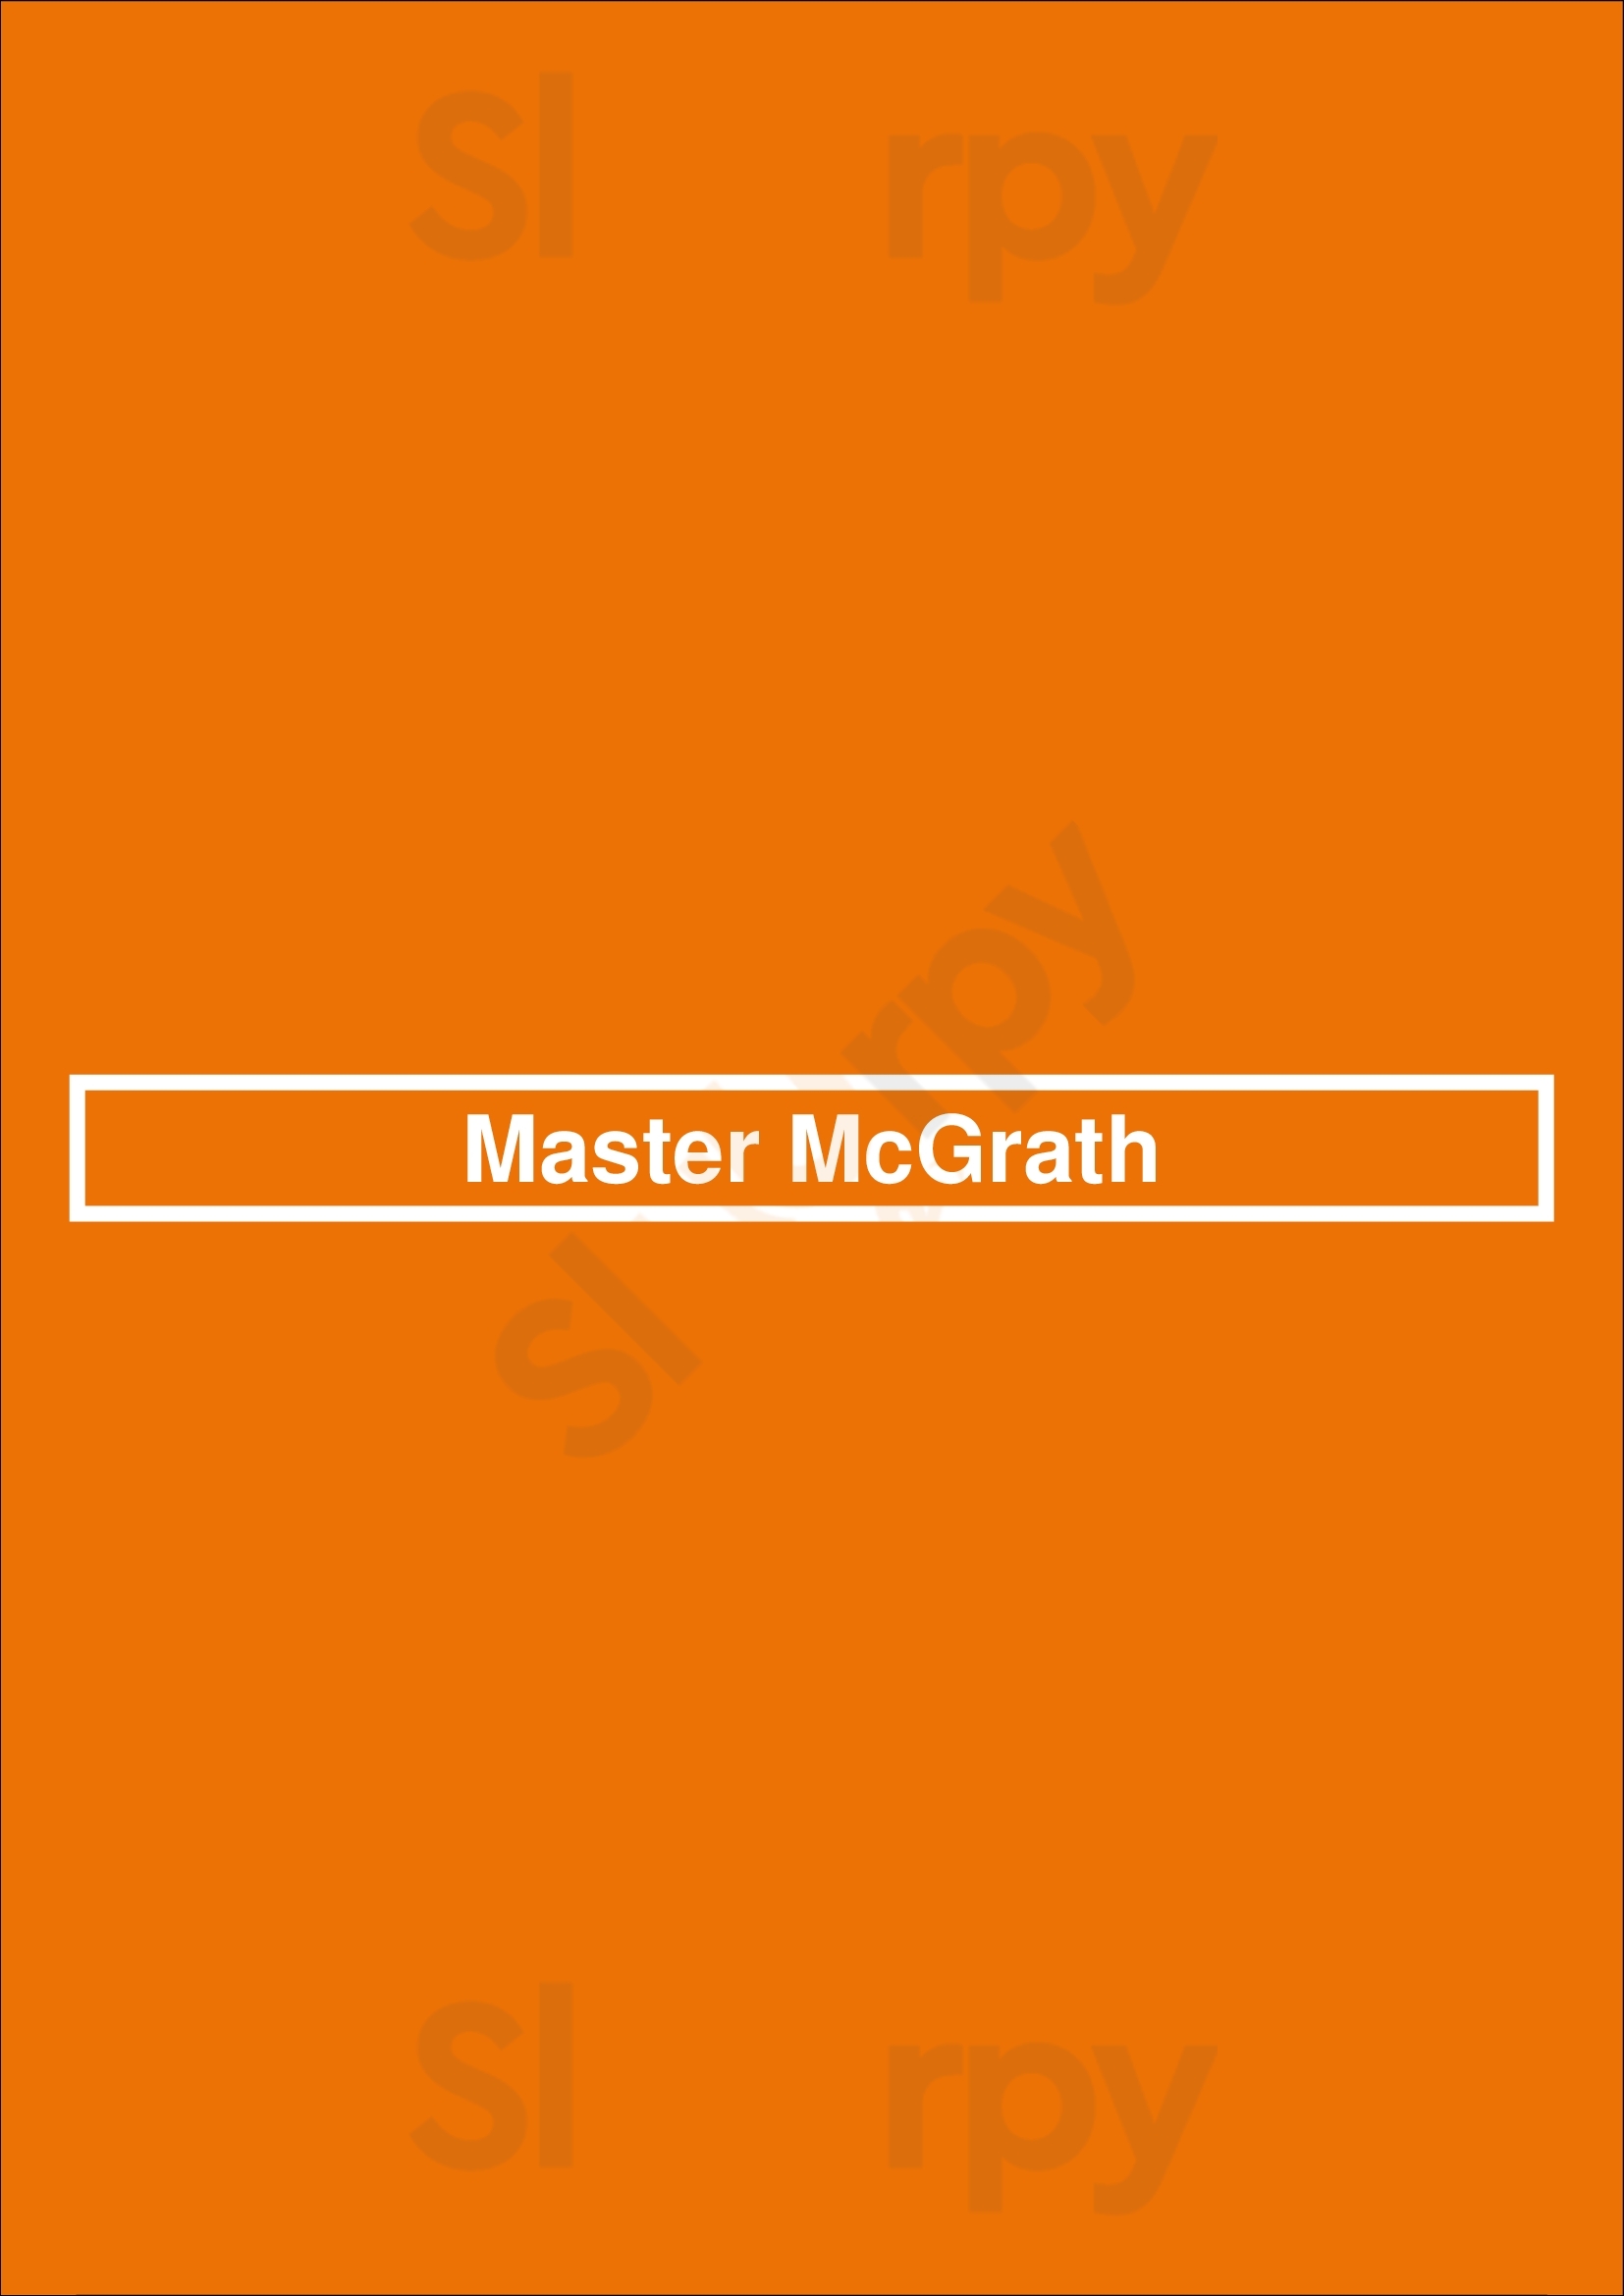 Master Mcgrath Boston Menu - 1